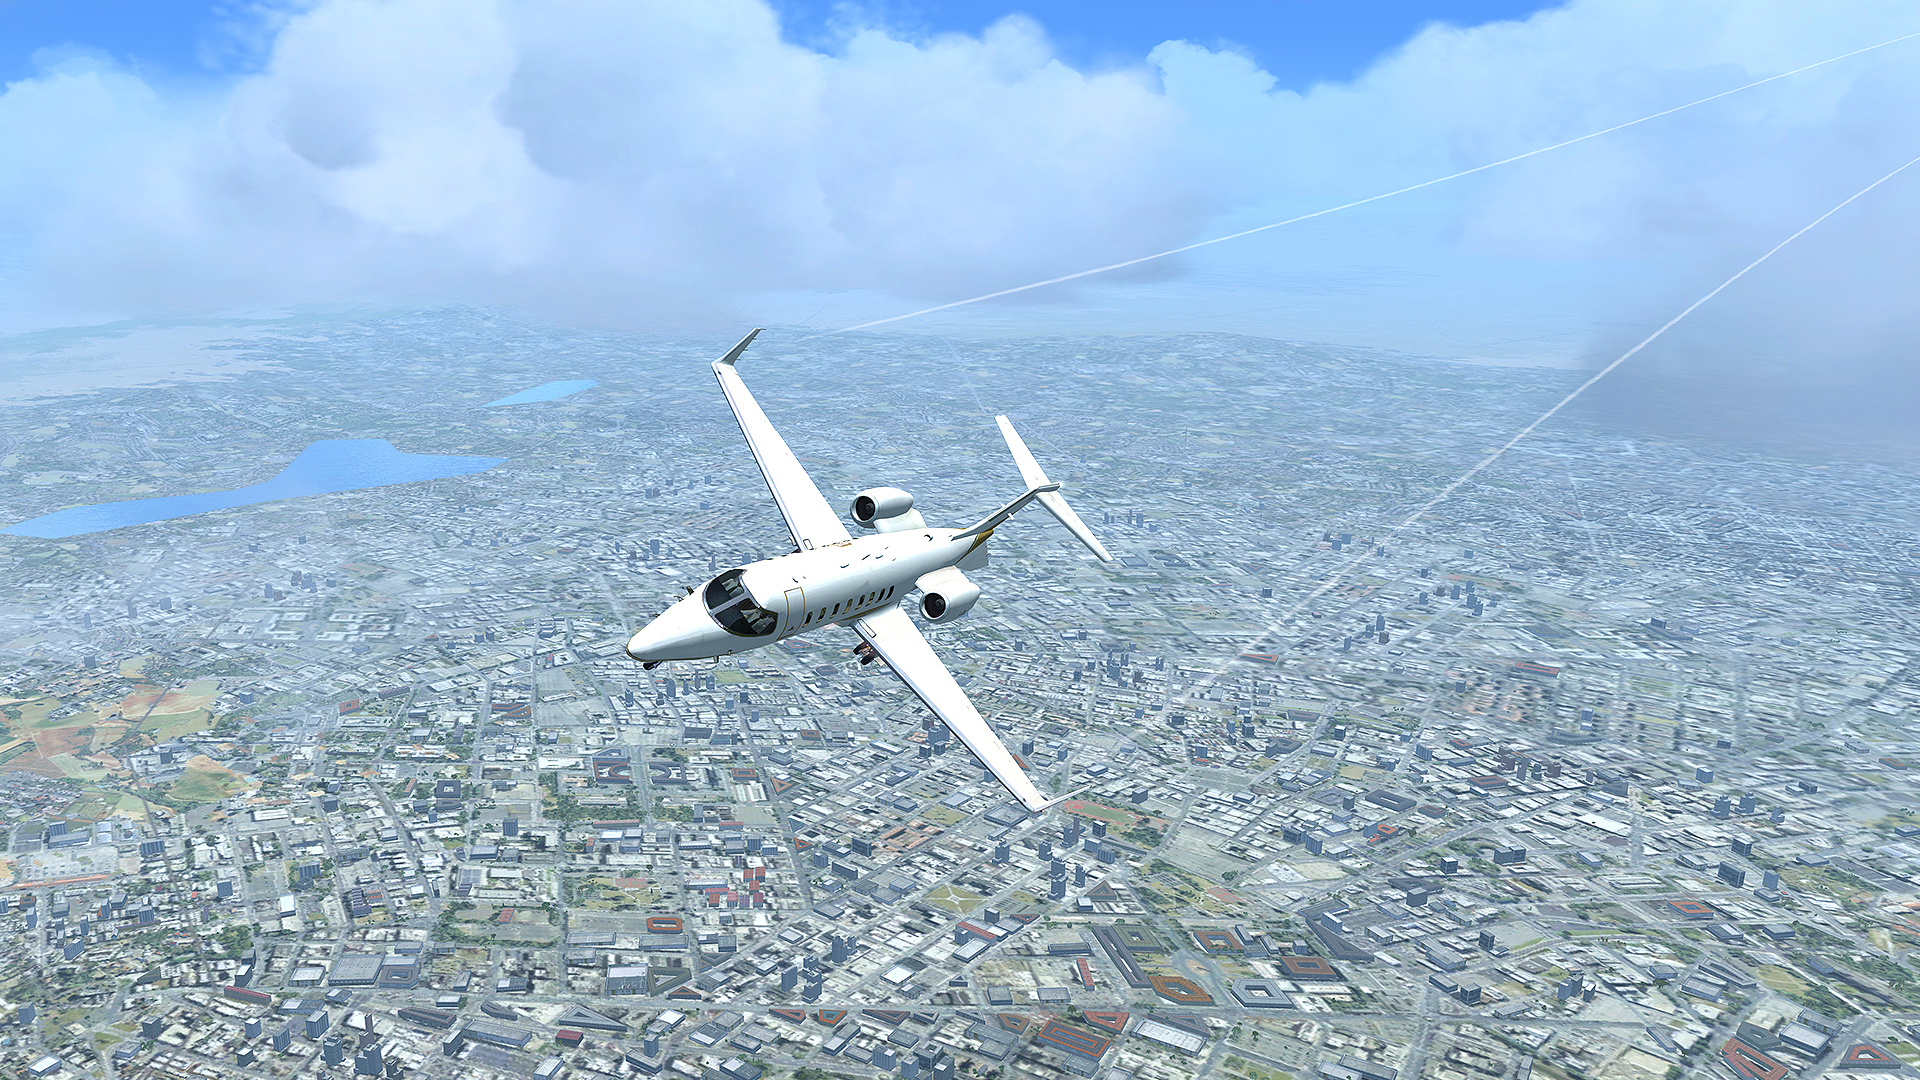 How to install Microsoft Flight Simulator on Steam – Microsoft